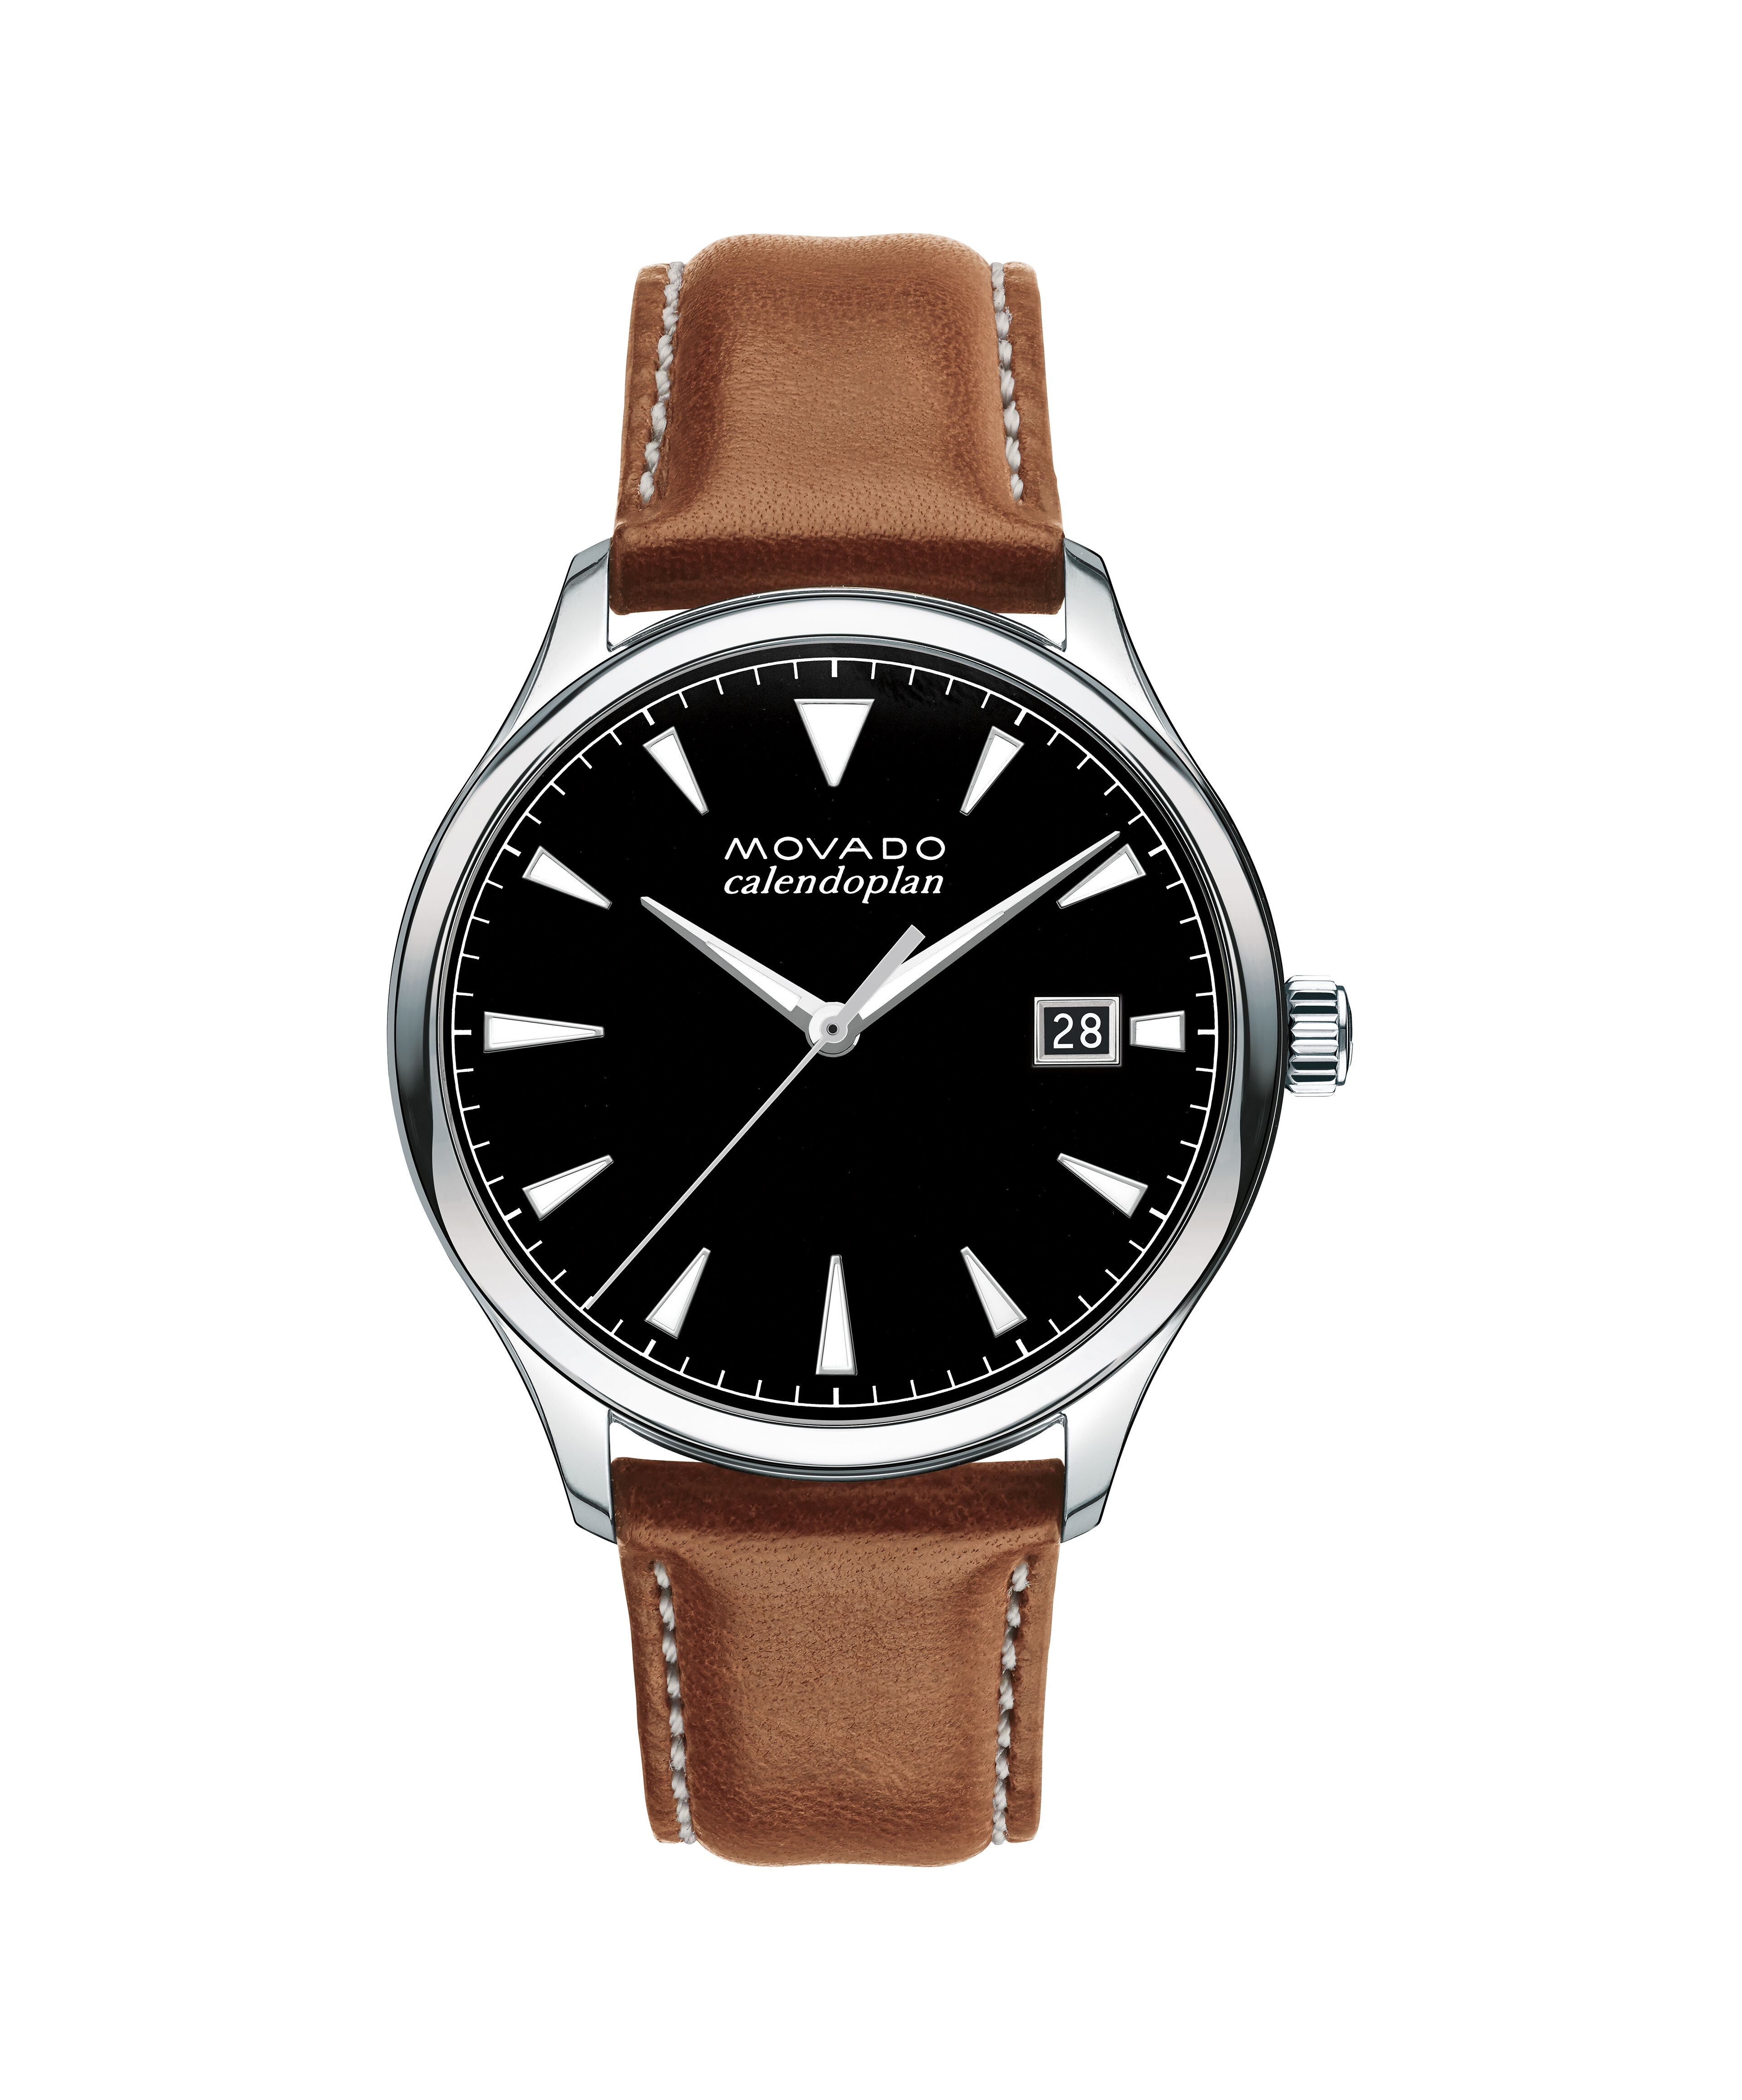 Quality Replica Cartier Watches